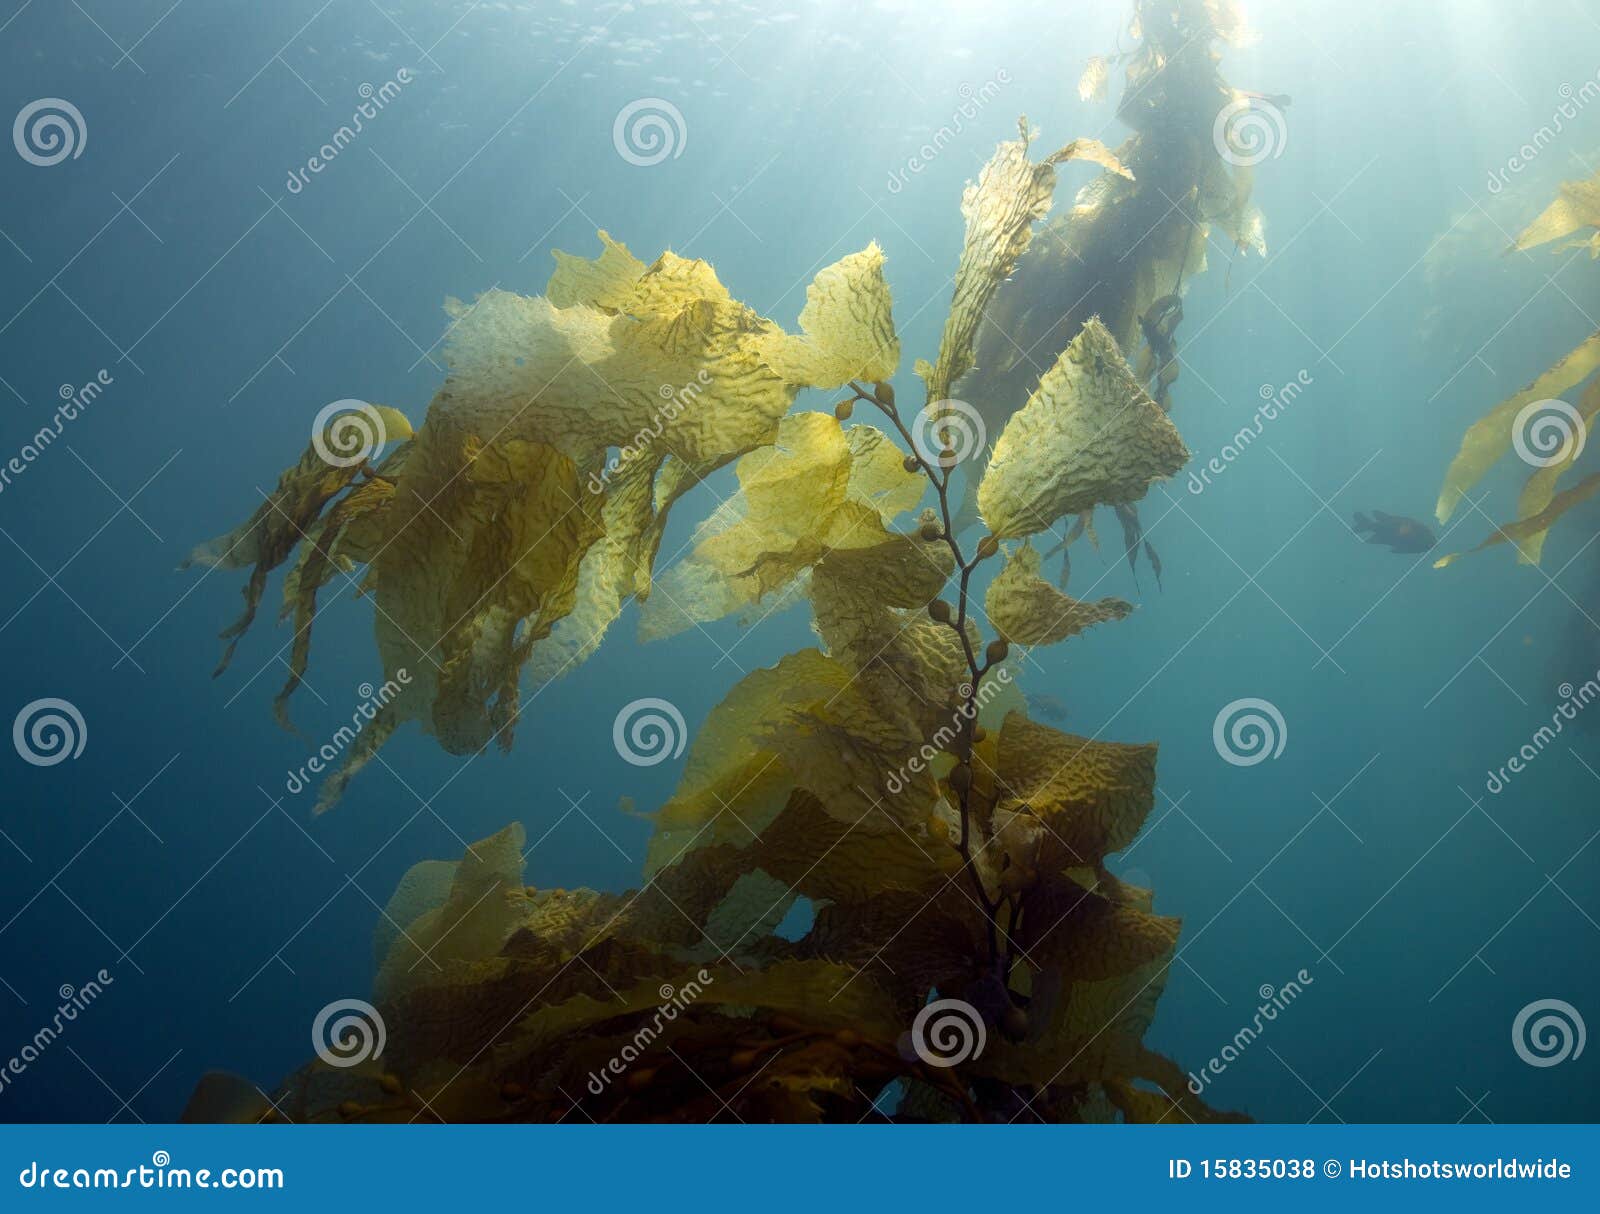 underwater kelp forest,catalina island,california